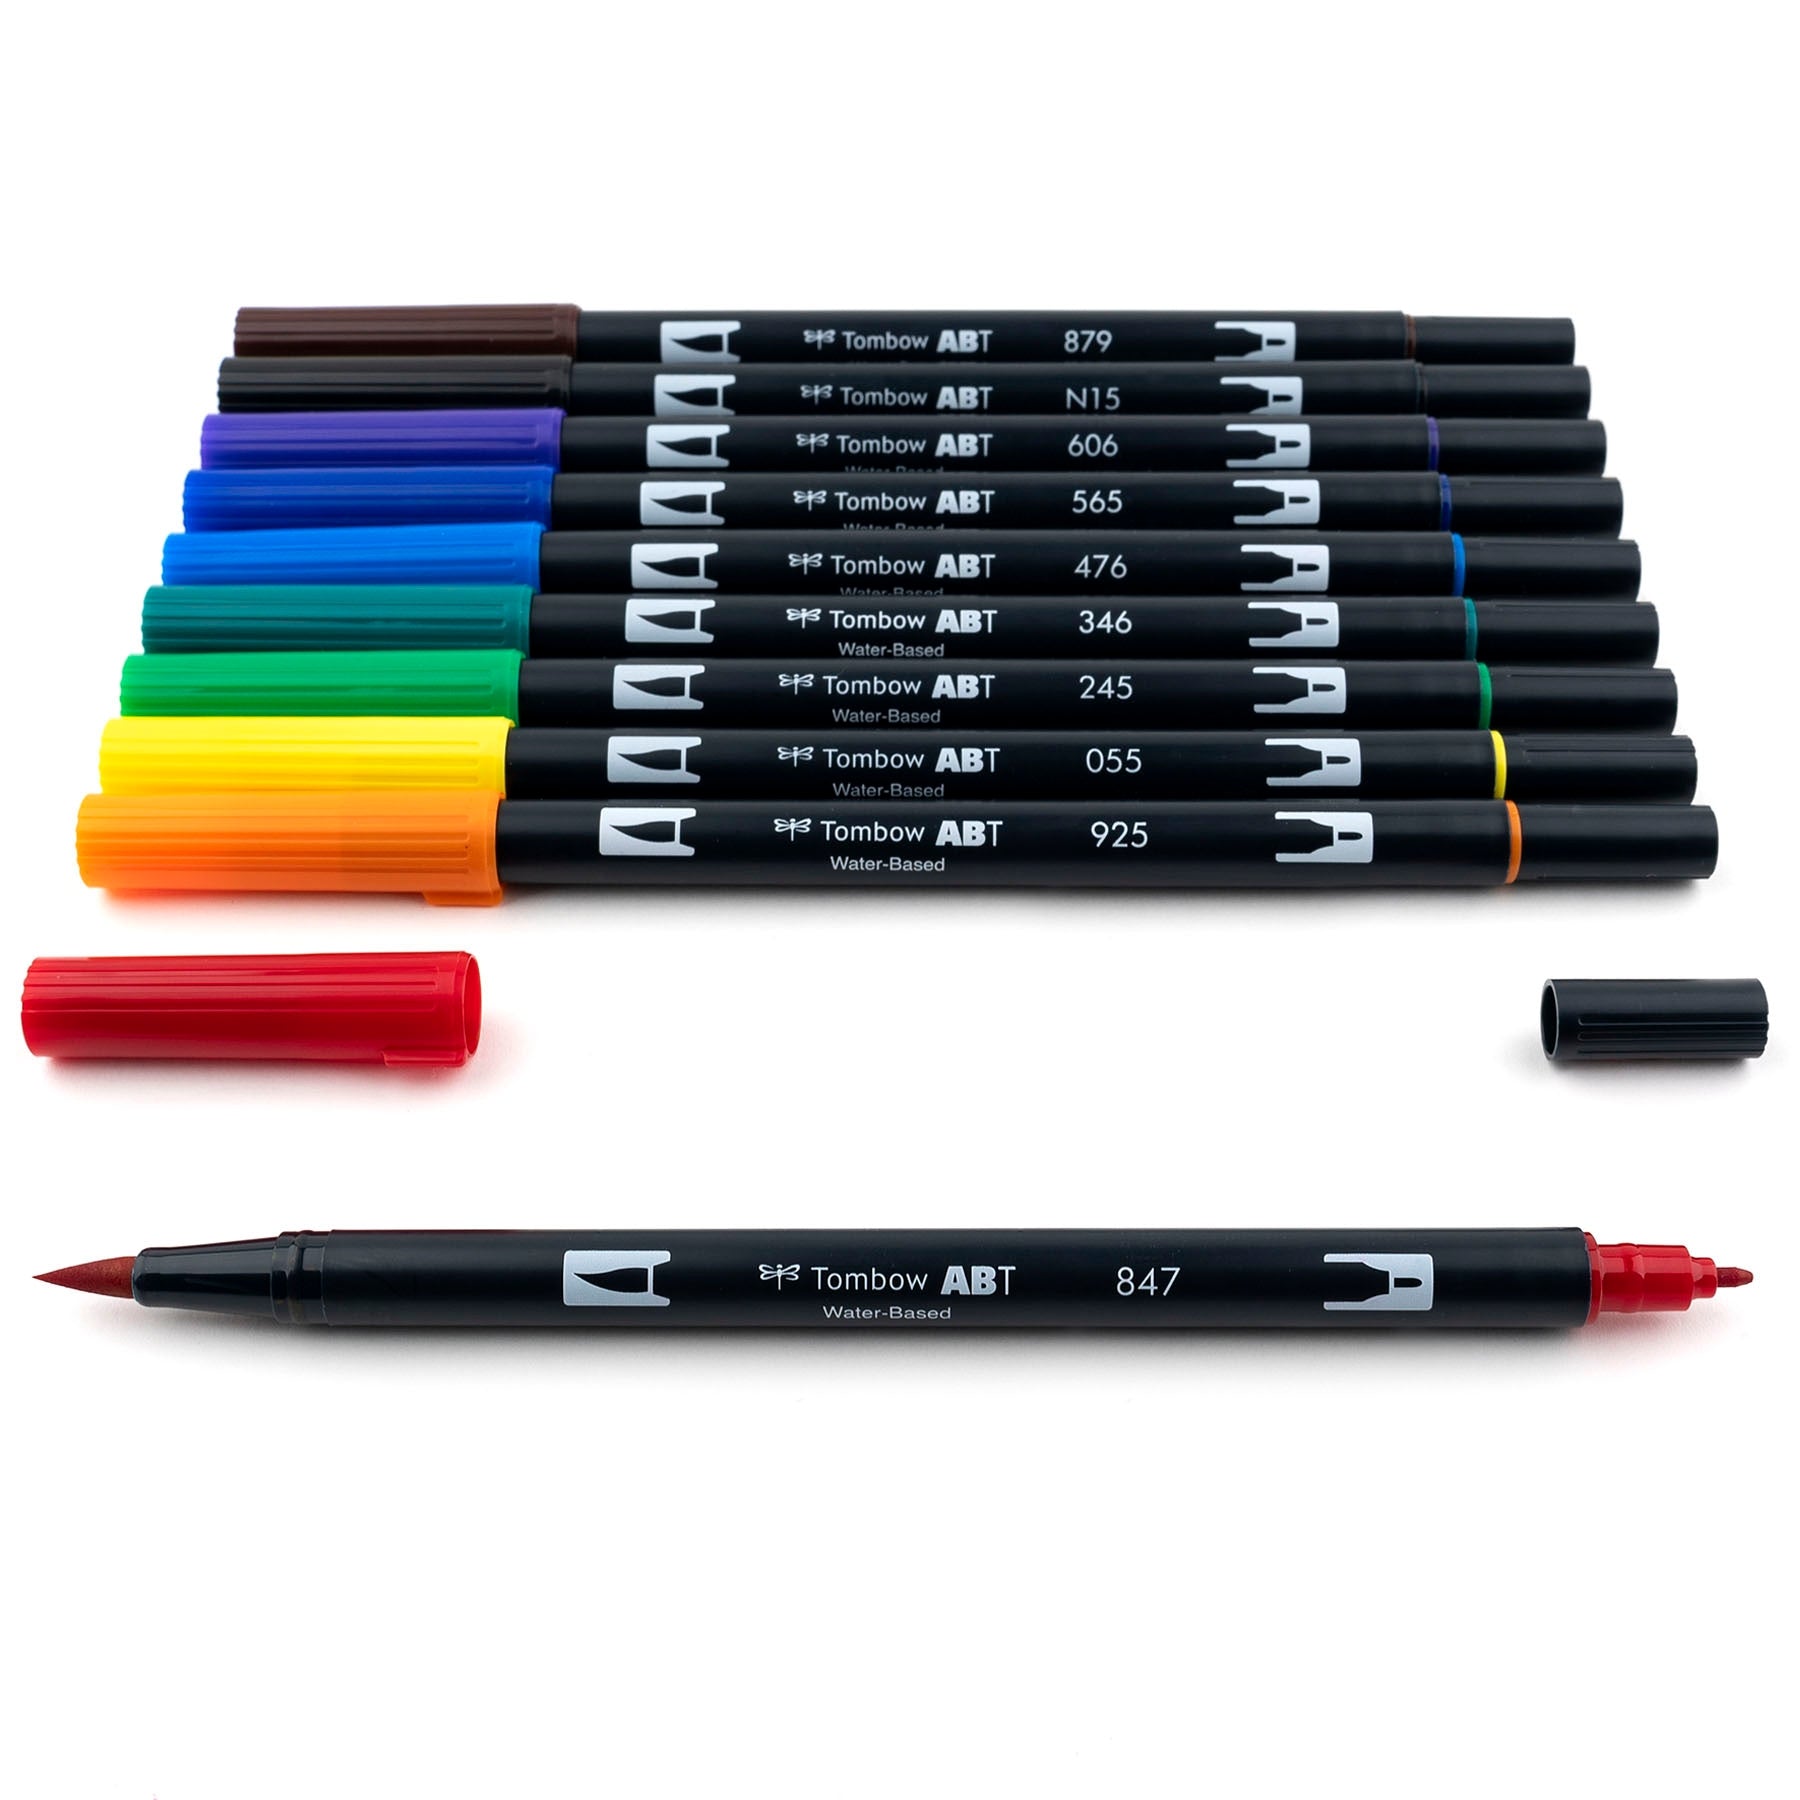 Tombow Dual Brush Pens - Individuals - New Colors – K. A. Artist Shop